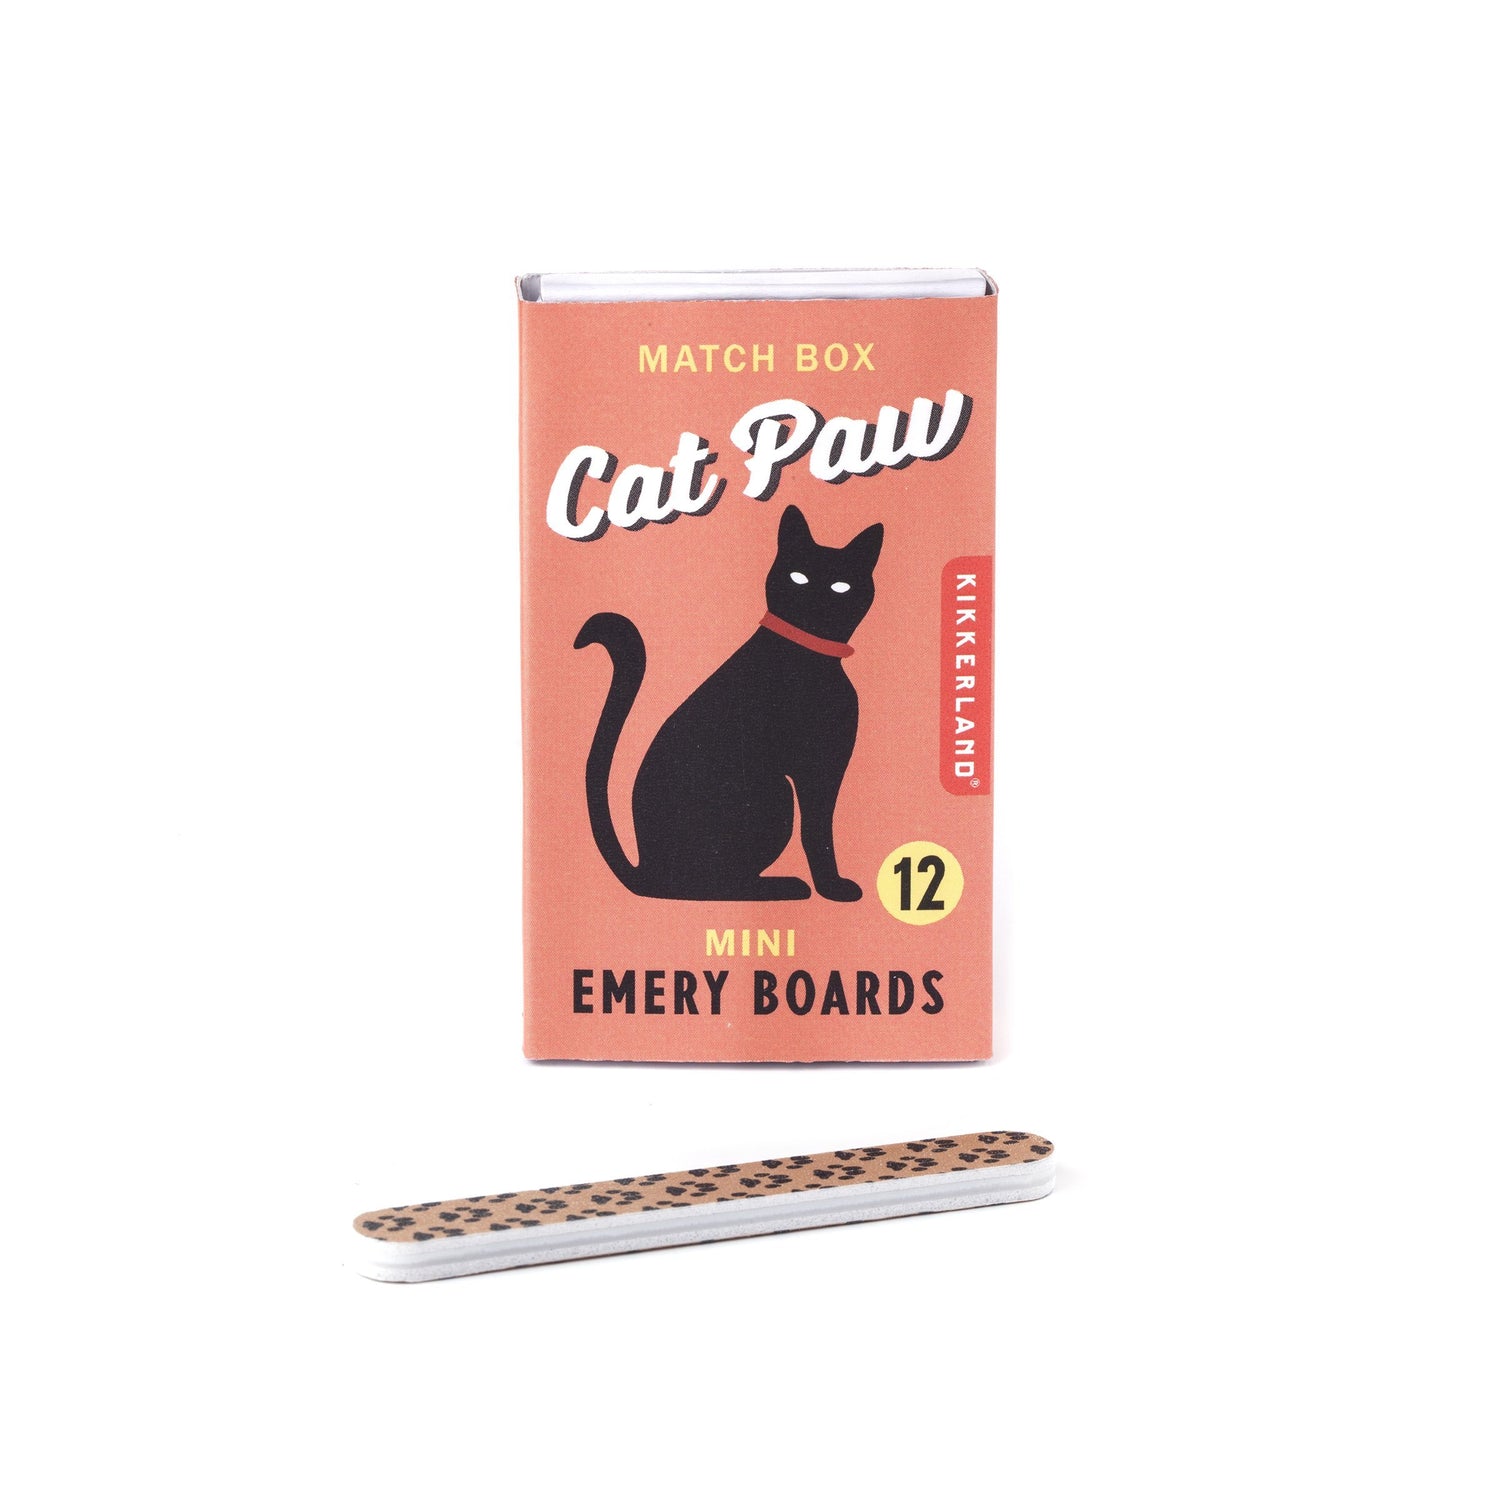 Cat Paw Match Box Emery Boards